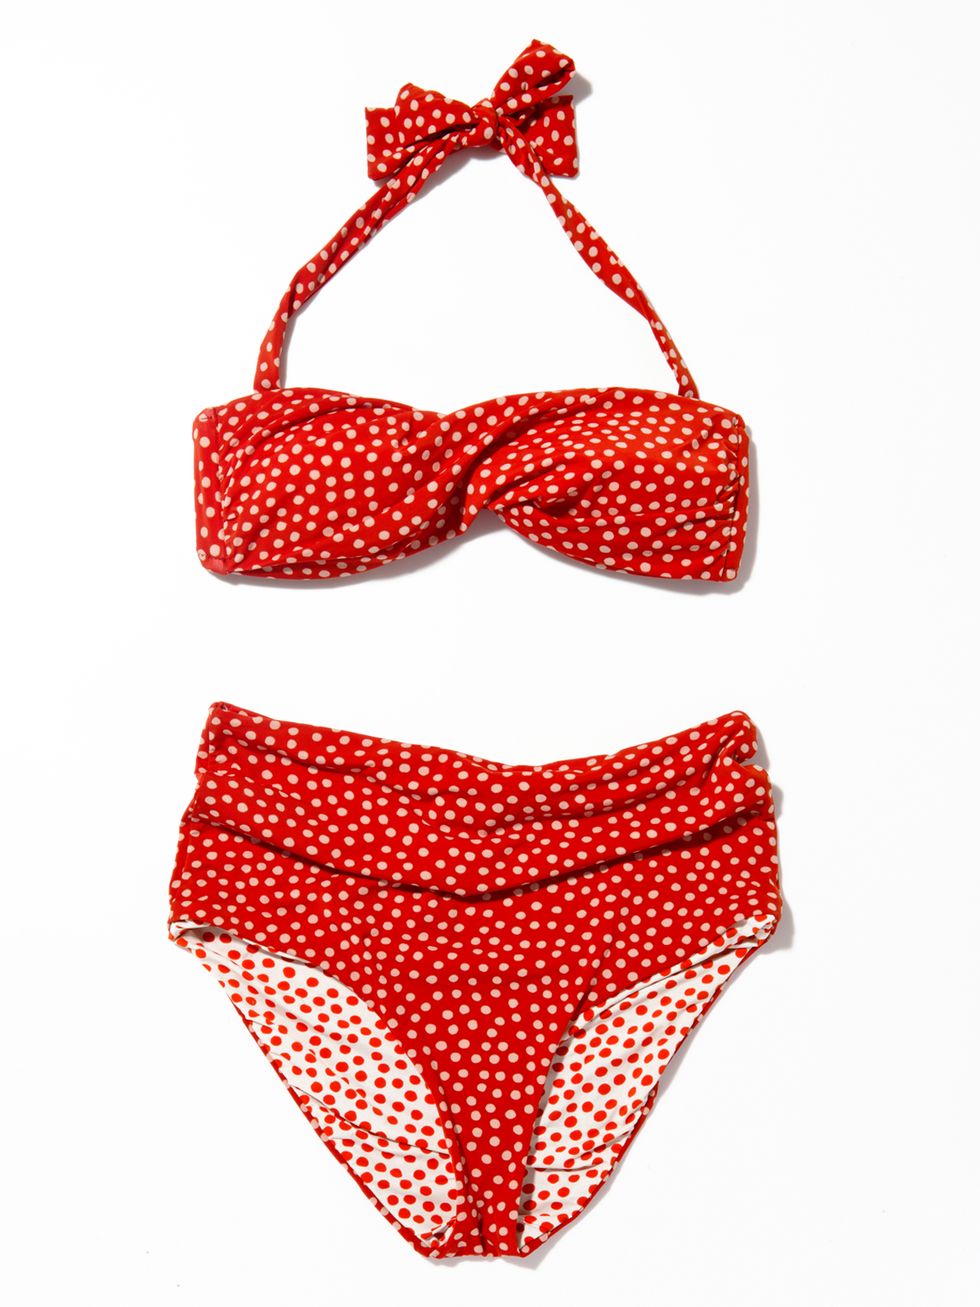 Pattern, Red, Undergarment, Carmine, Brassiere, Swimsuit bottom, Lingerie, Briefs, Bikini, Design, 